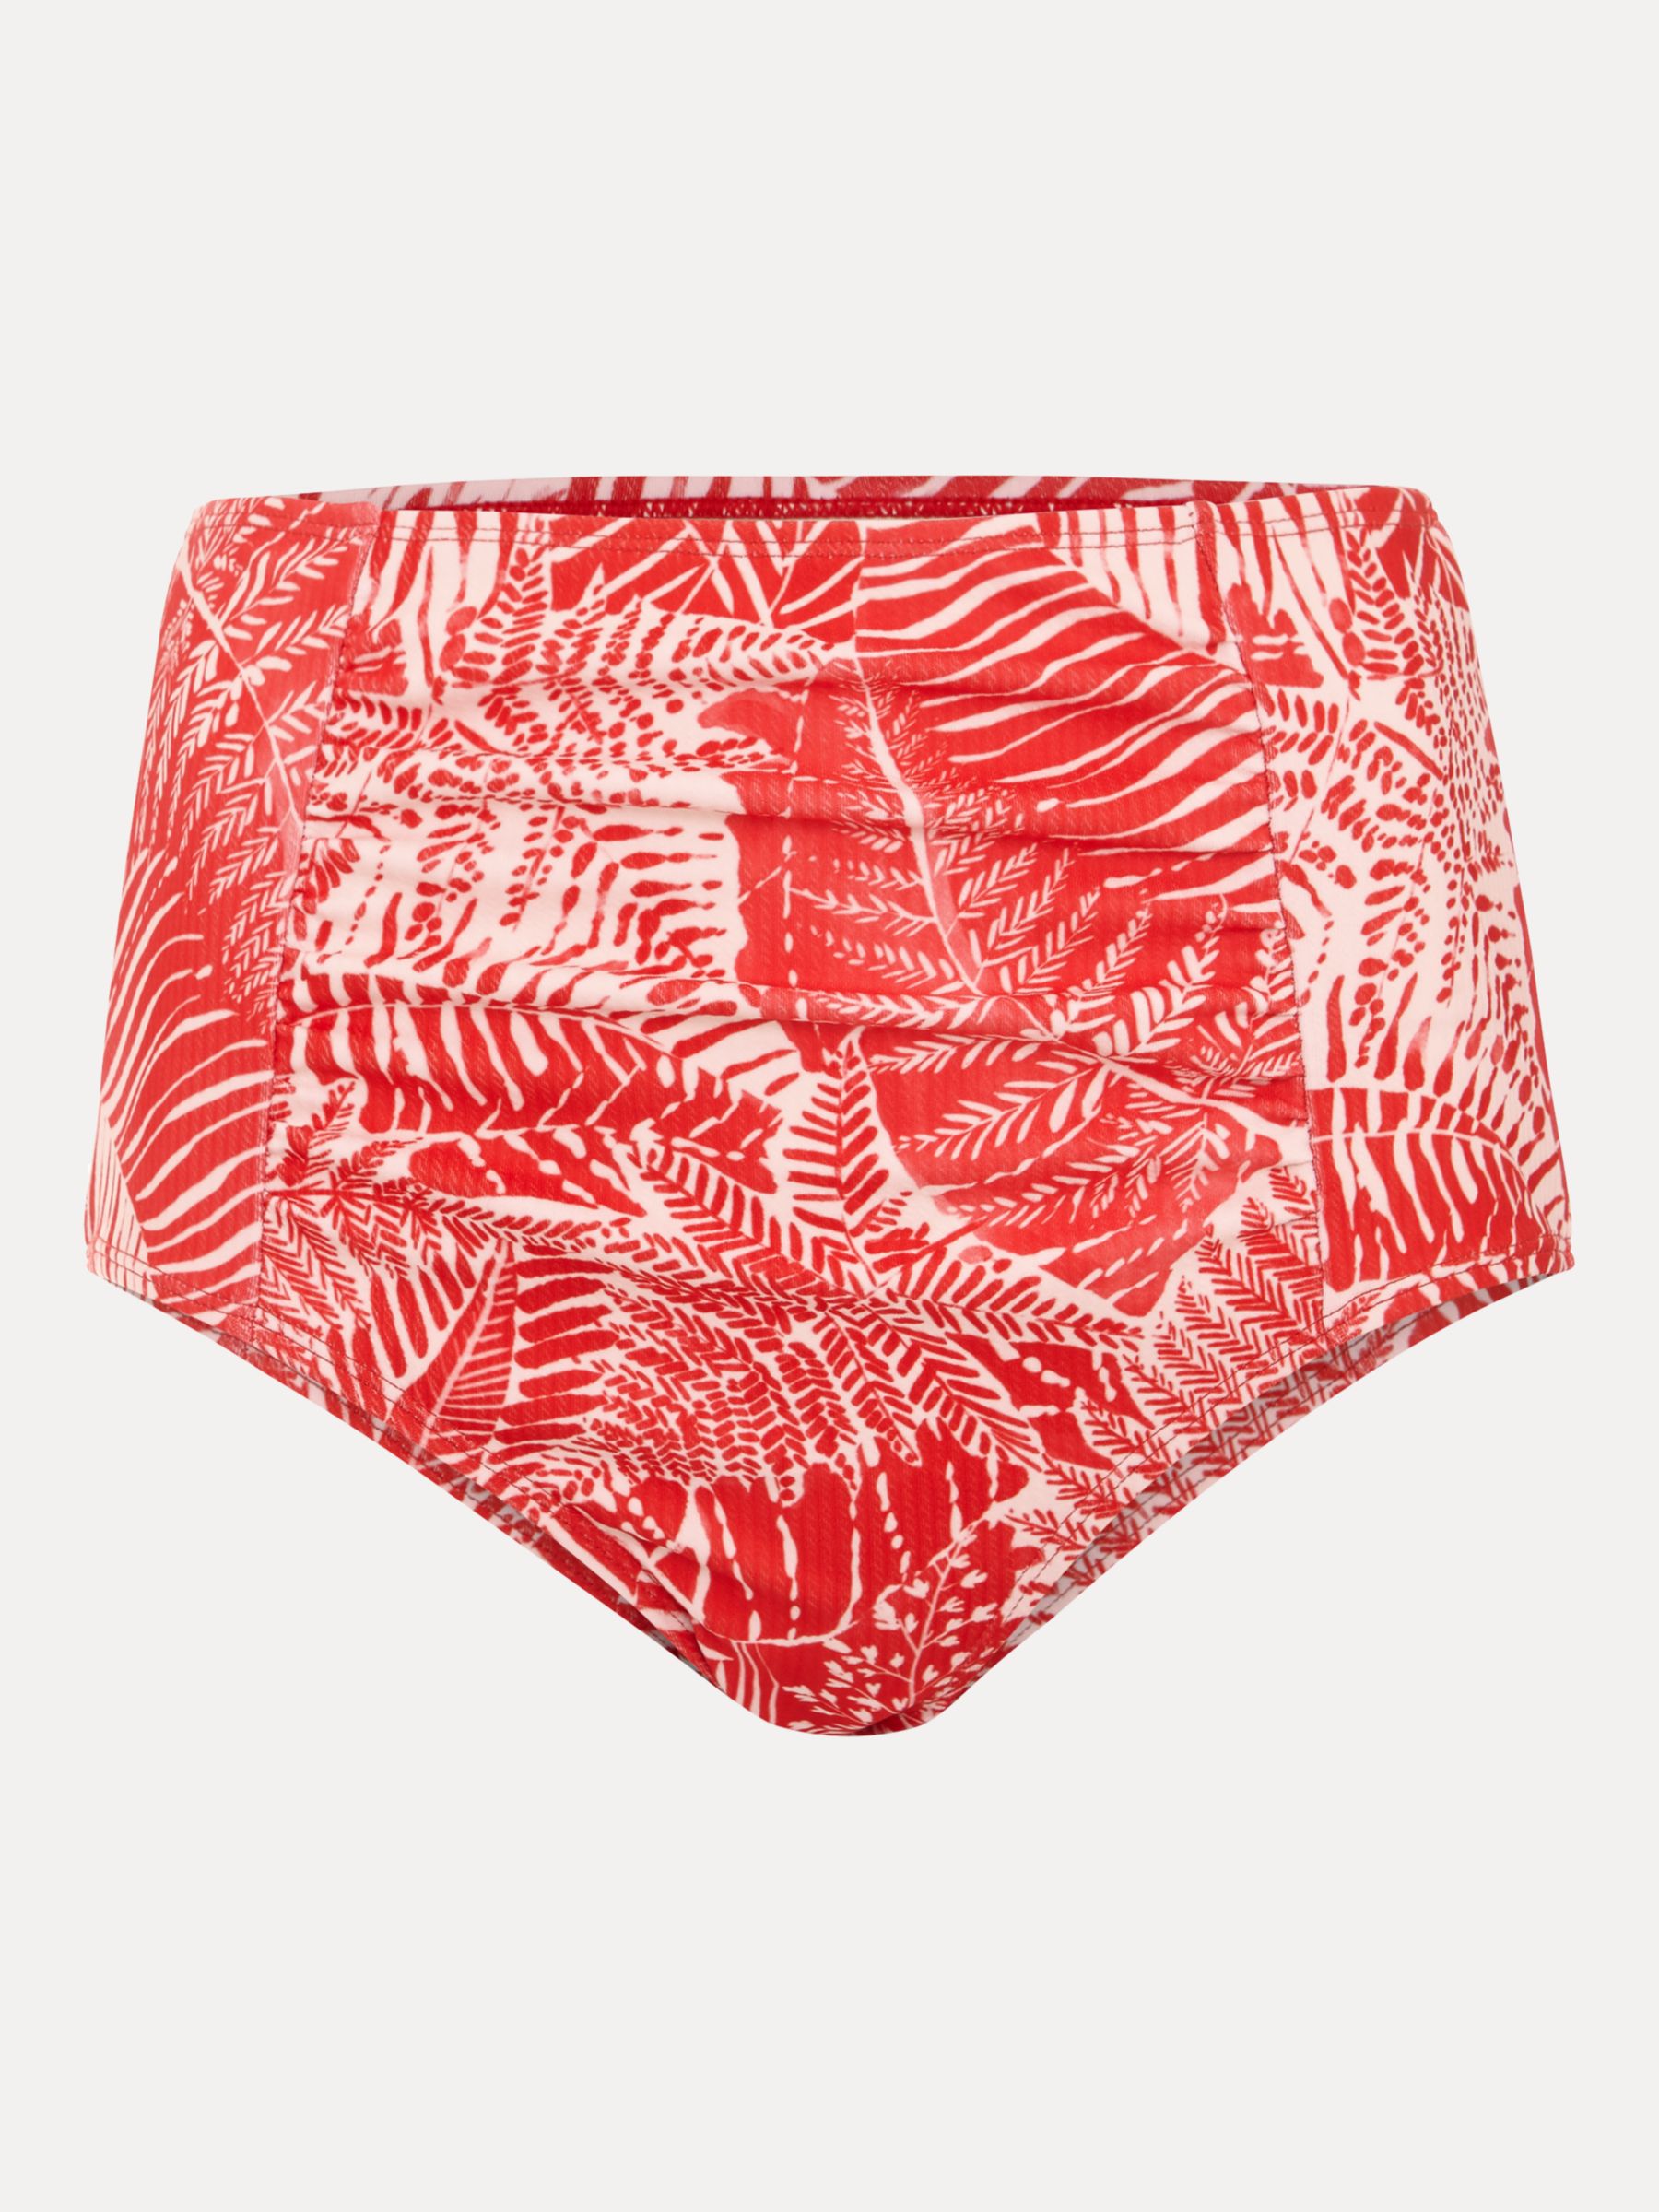 Phase Eight Fern Leaf Print High Waist Swim Bottoms, Red/White, 8